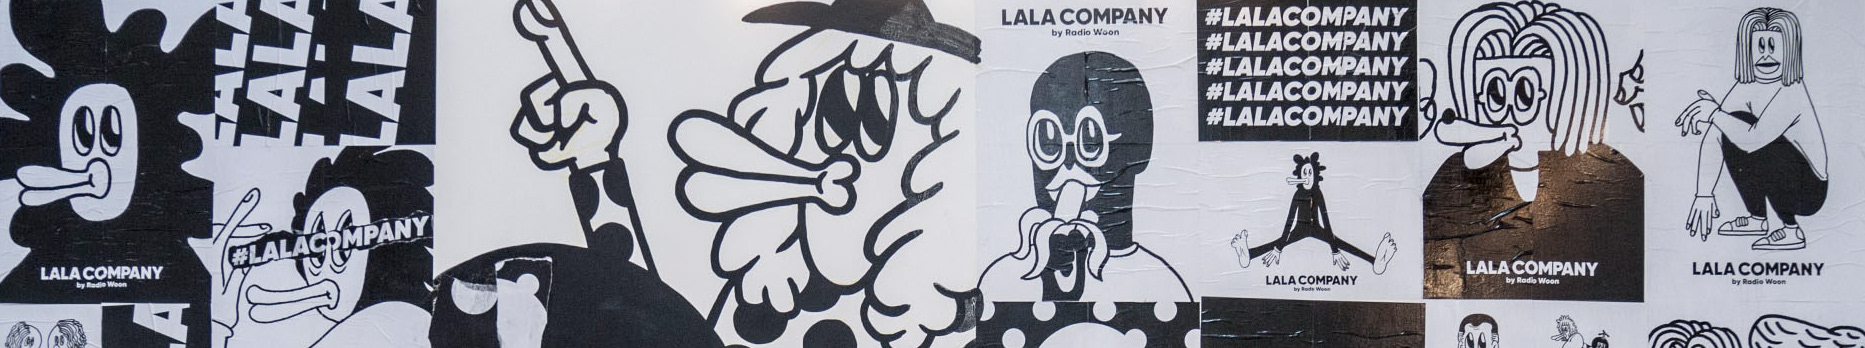 LALA COMPANY's profile banner